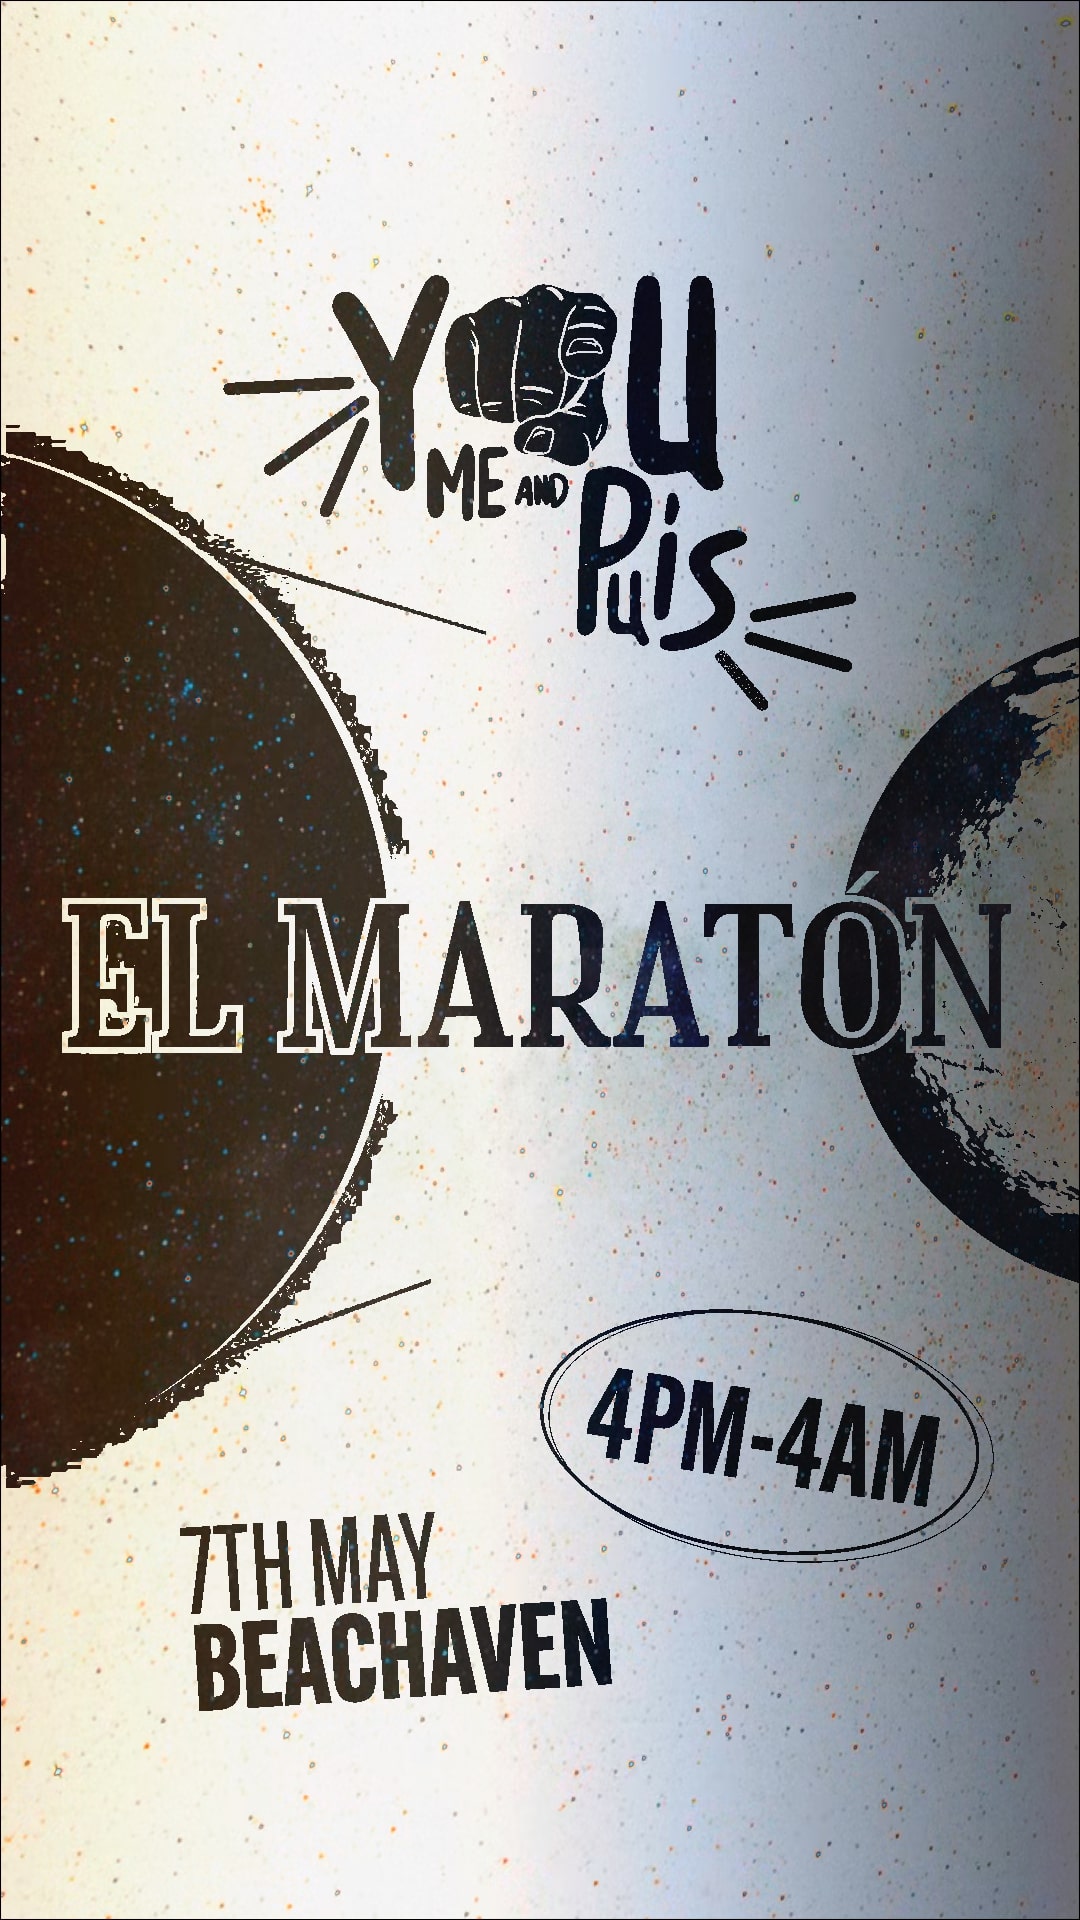 You, Me & Puis [El Maratón] poster